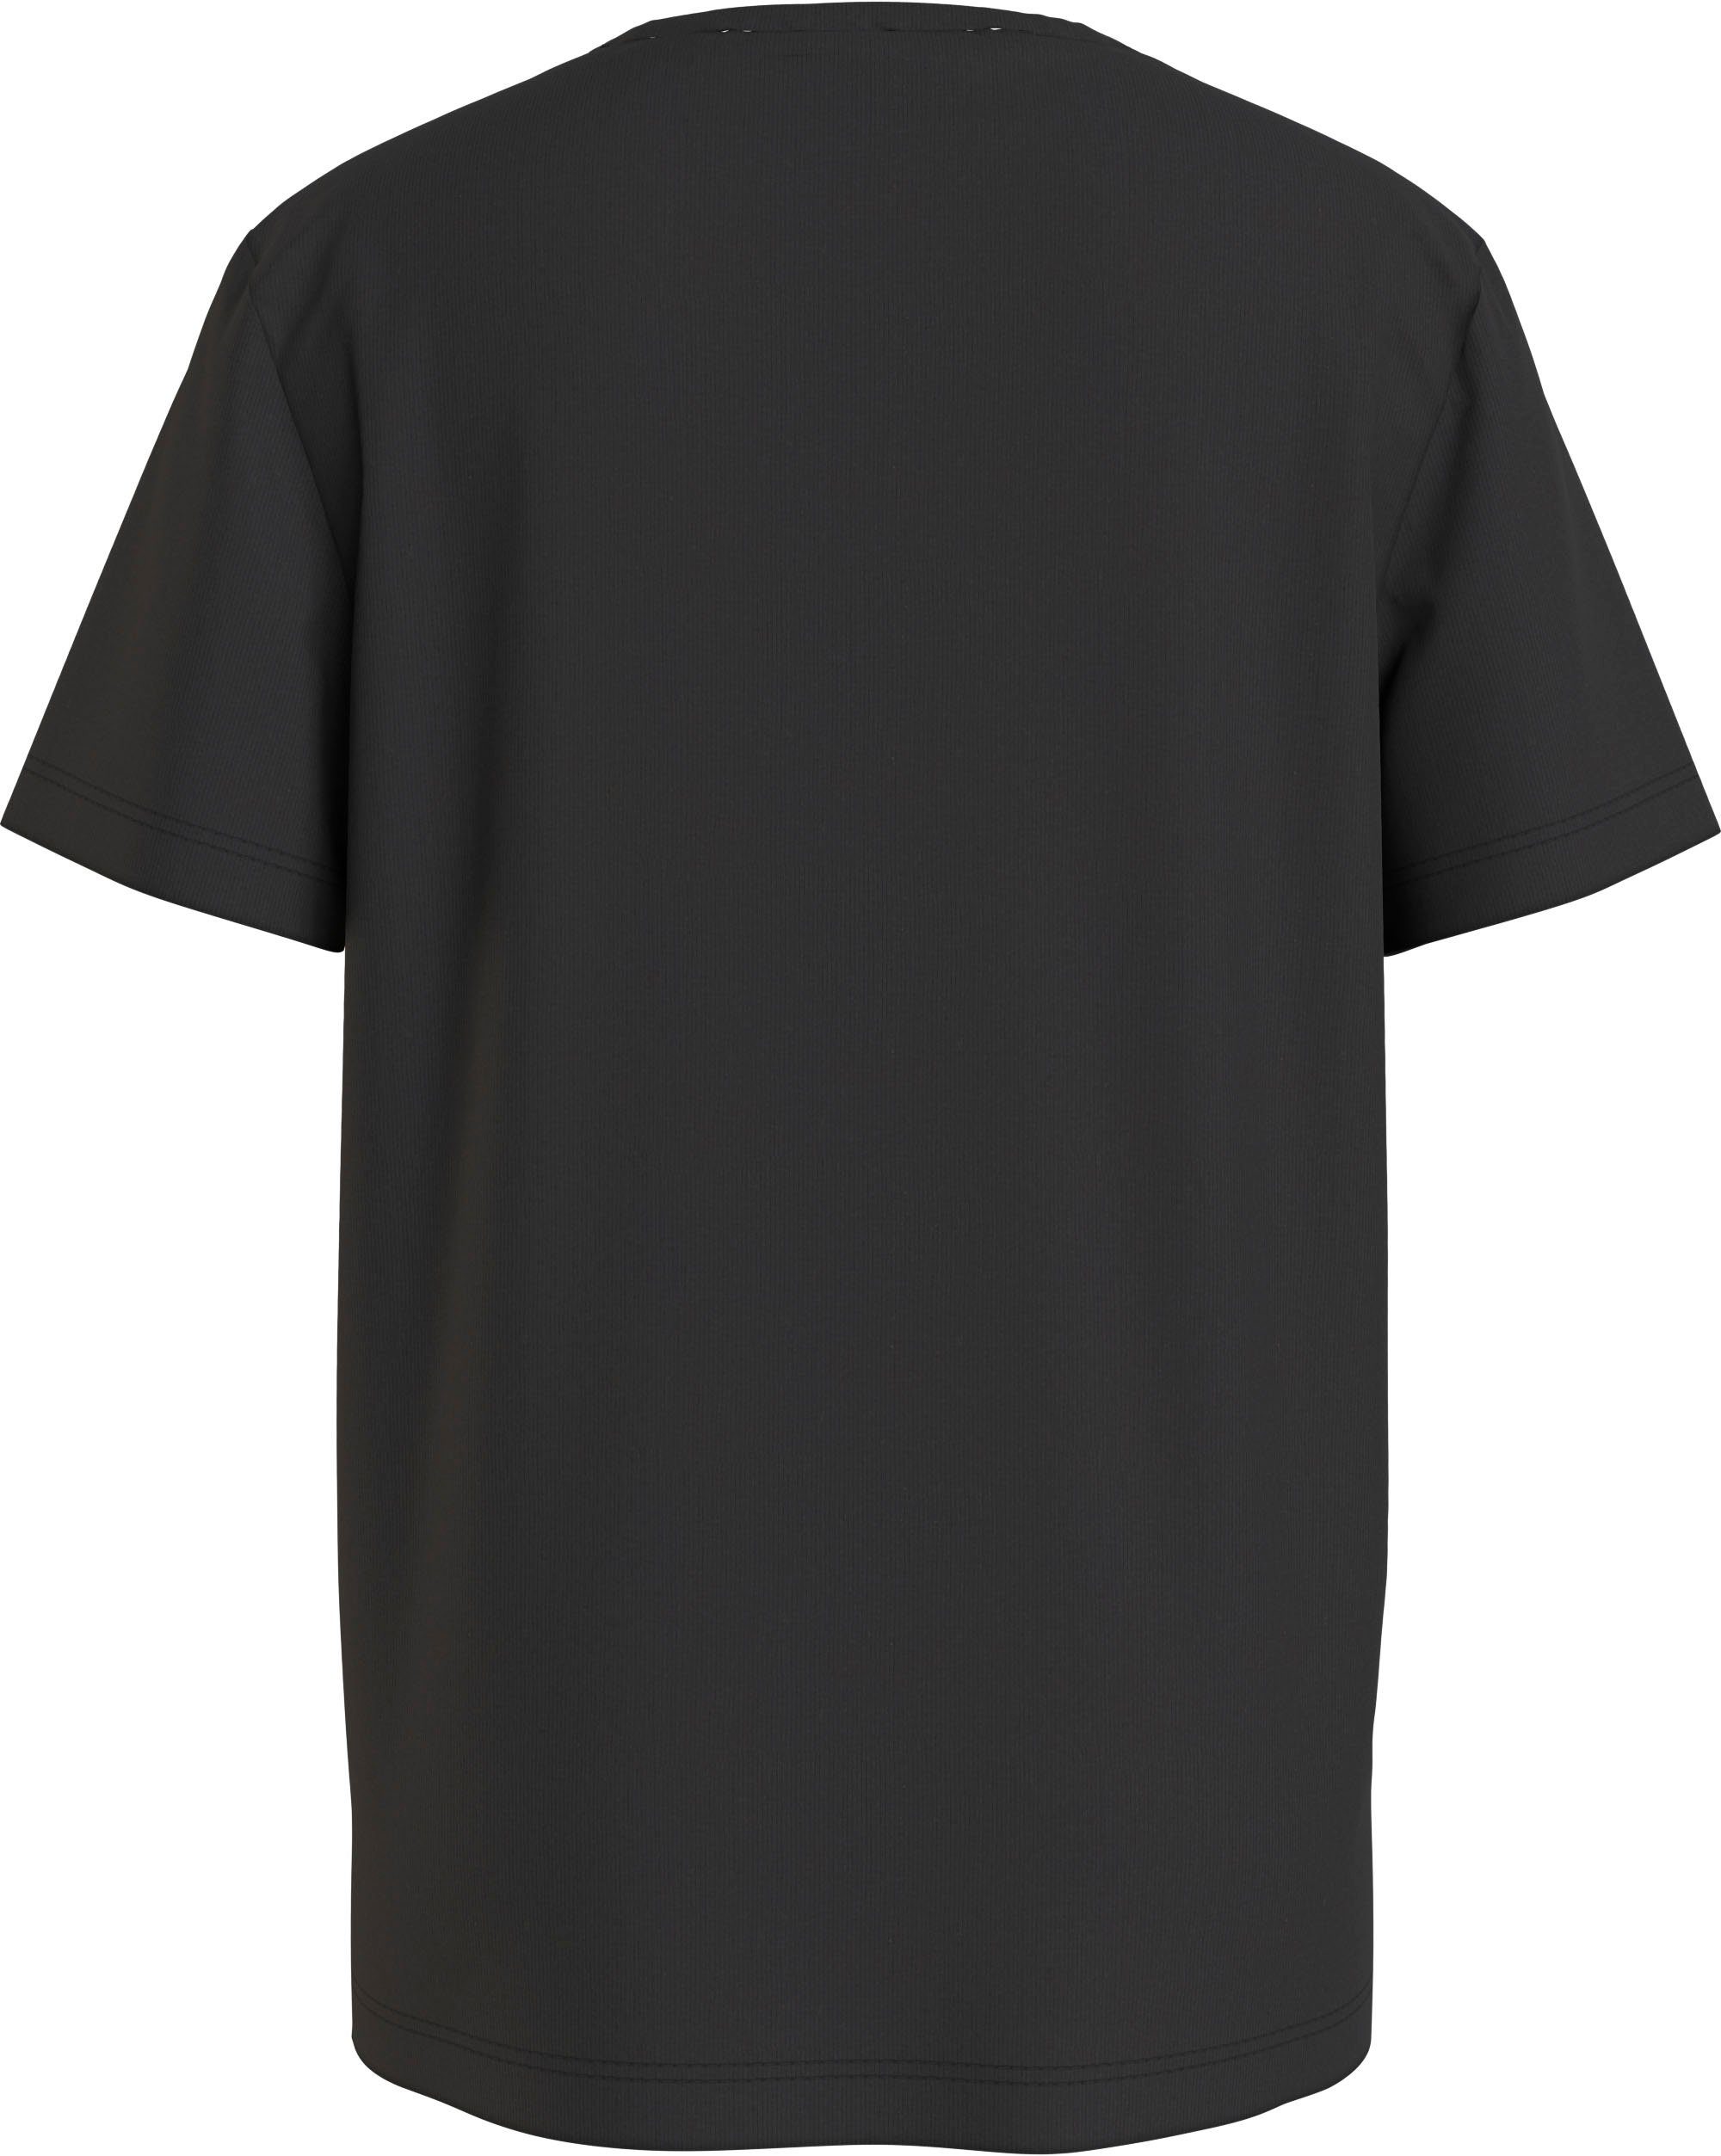 Calvin Klein Jeans Black TOP Ck CHEST MONOGRAM T-Shirt